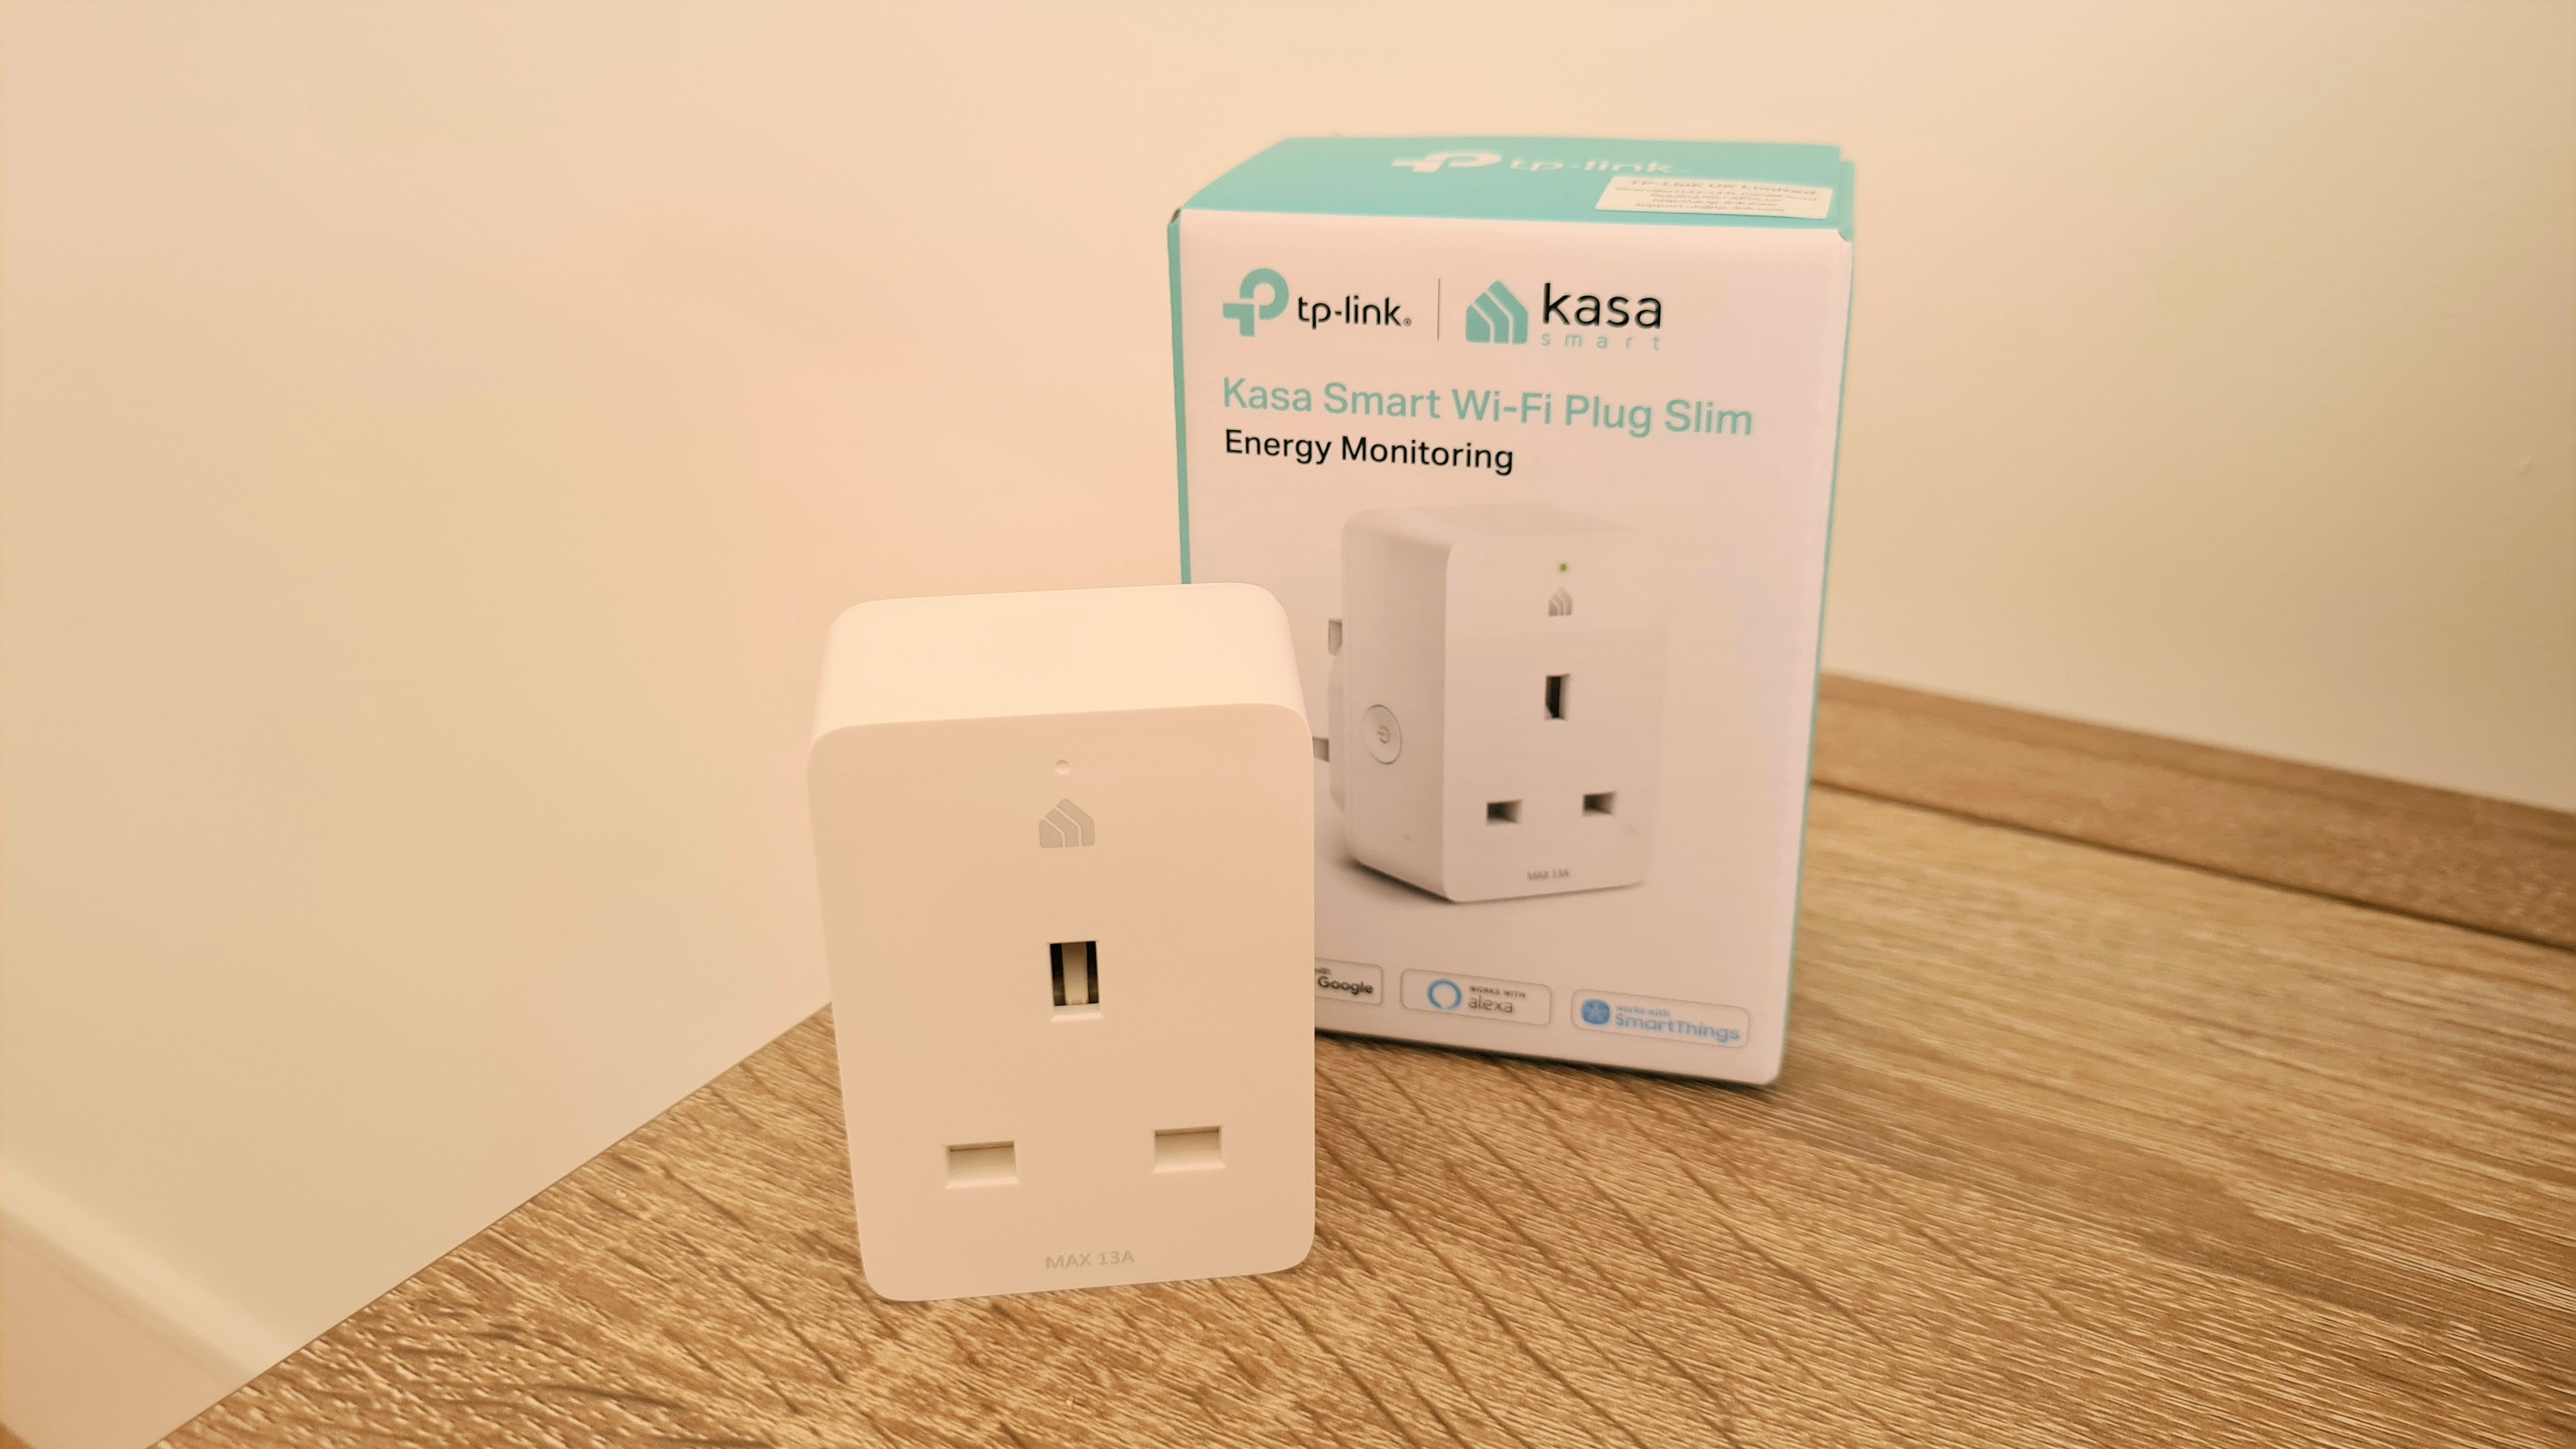 Kasa Smart Wi-Fi Plug Slim, Energy Monitoring